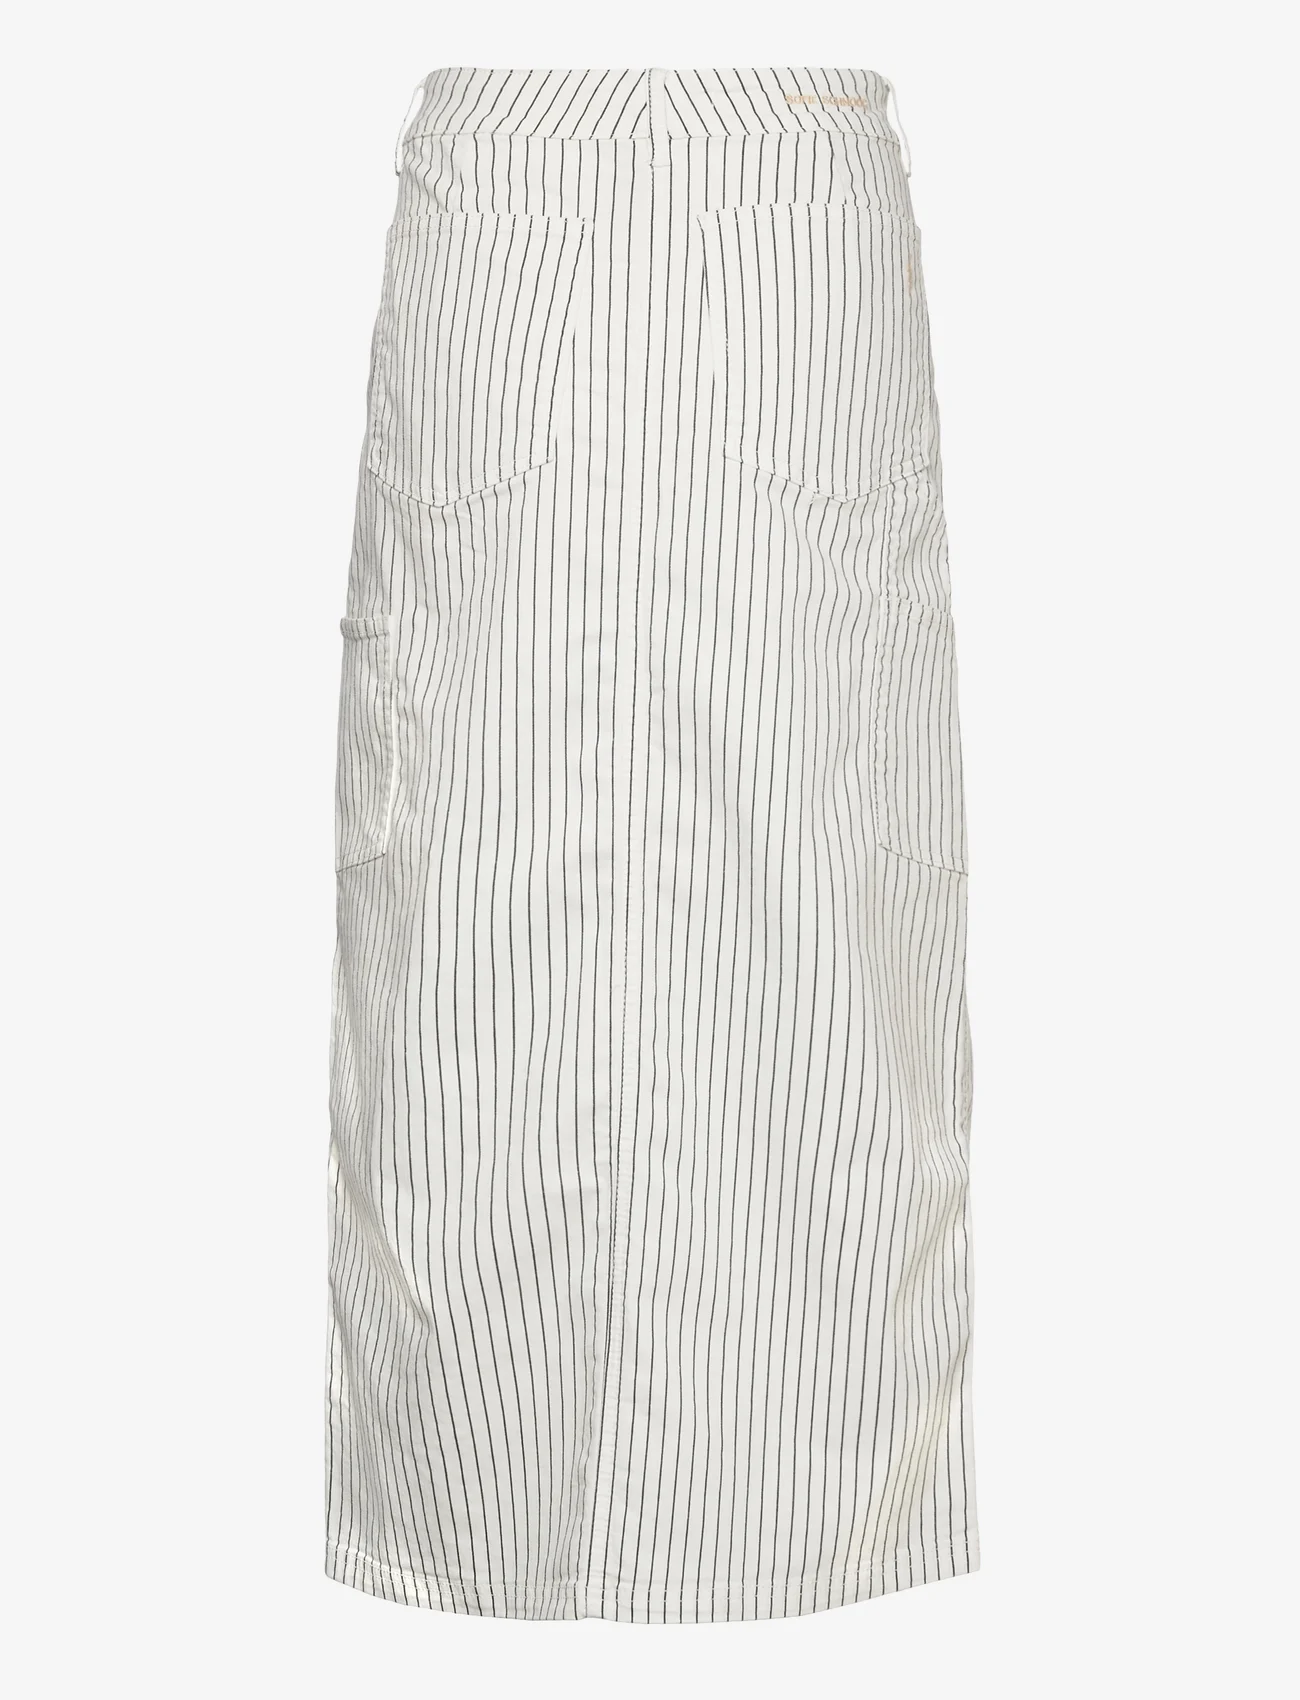 Sofie Schnoor - Skirt - maxi röcke - off white striped - 1